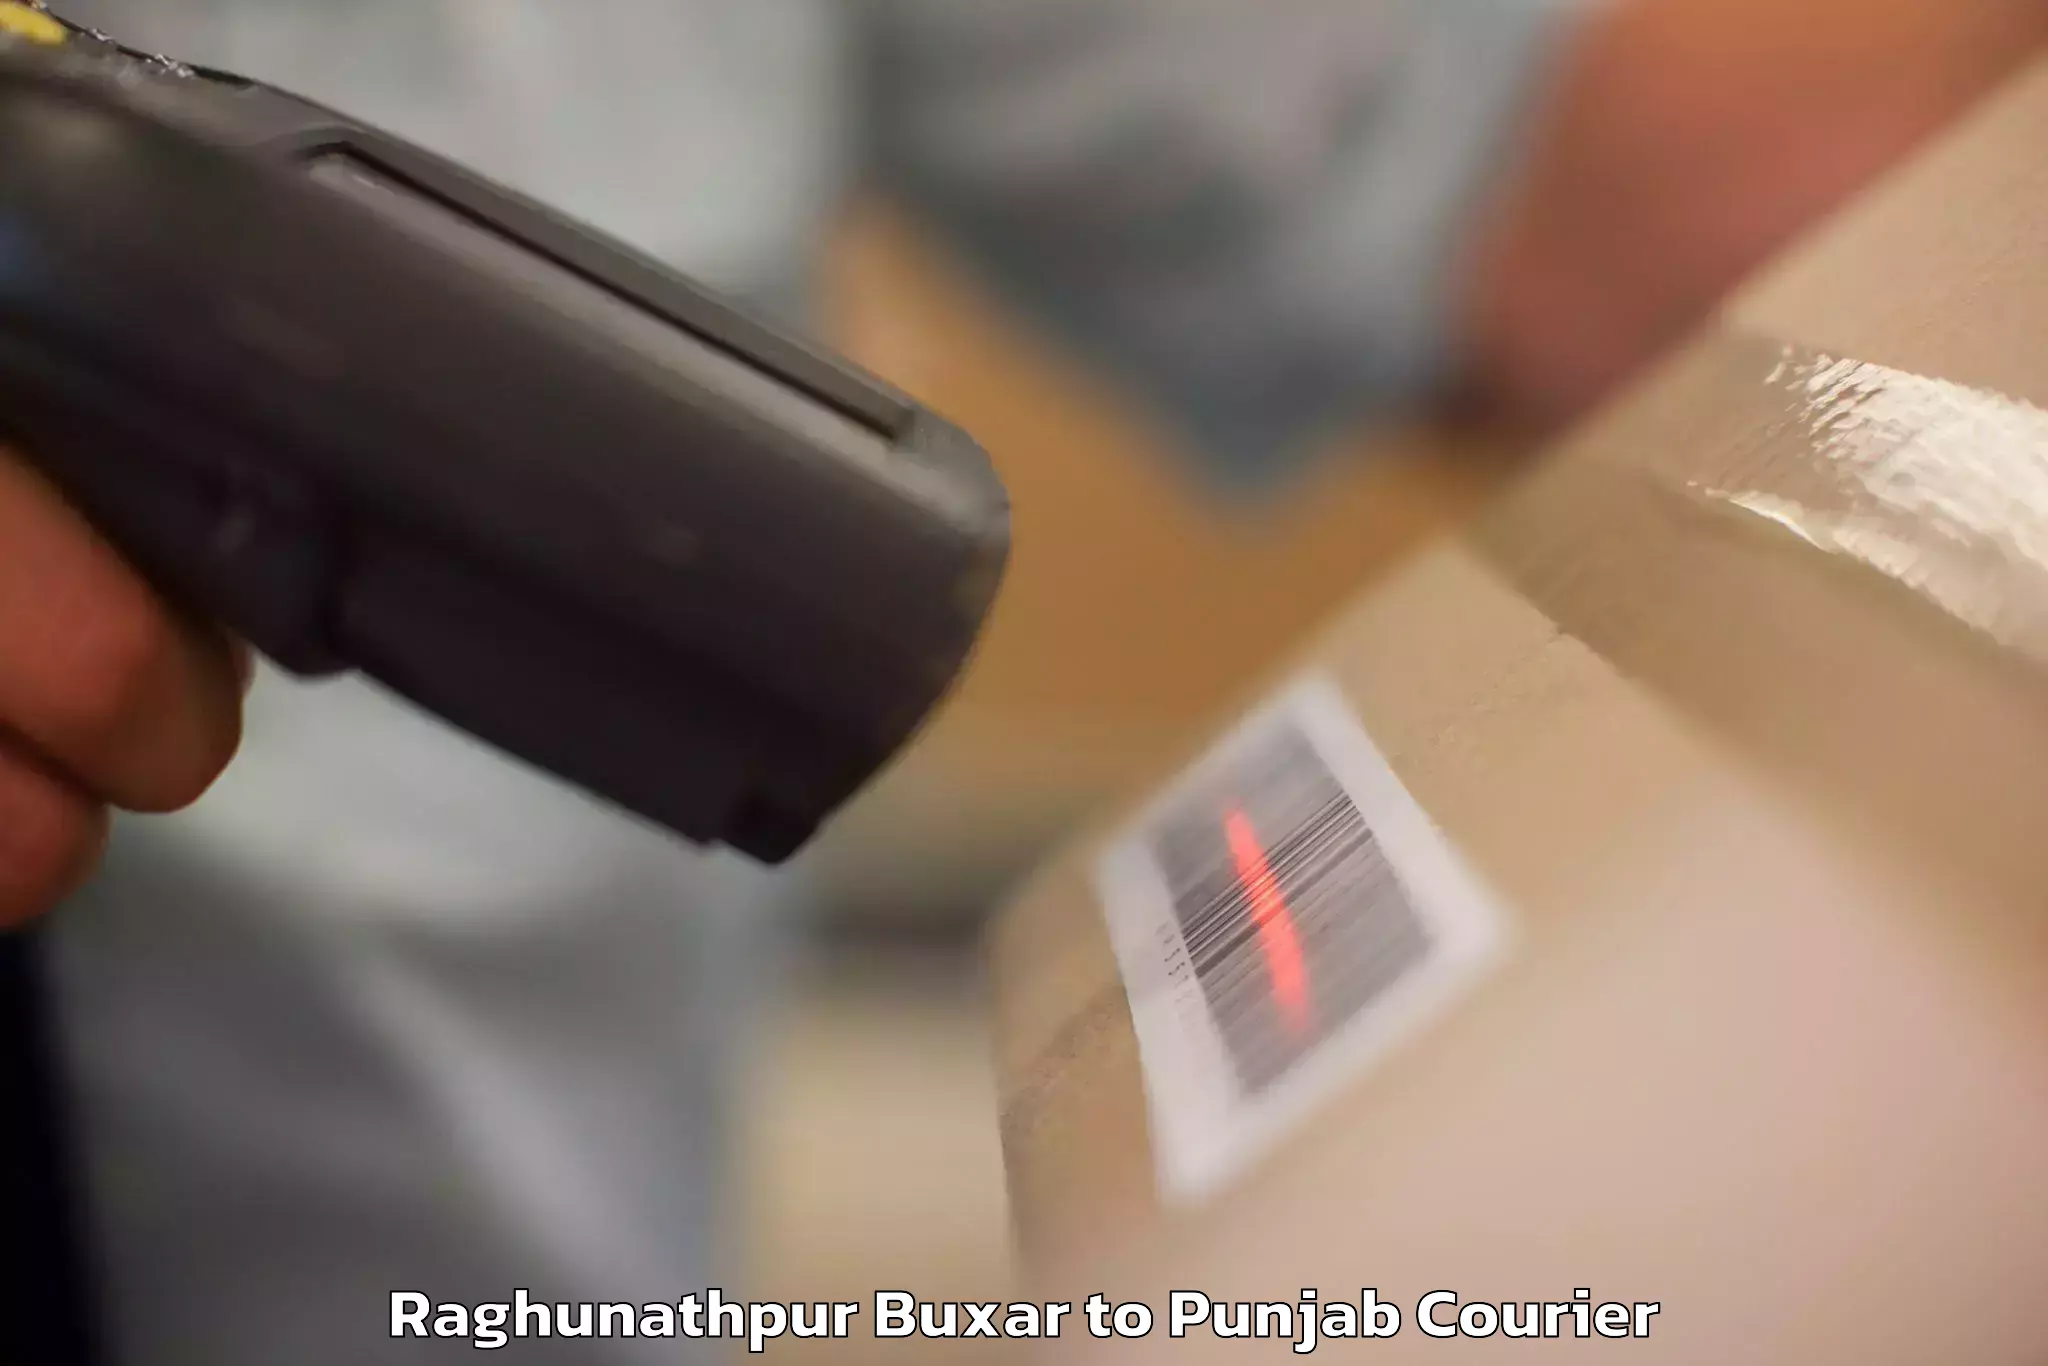 Luggage shipment specialists Raghunathpur Buxar to Punjab